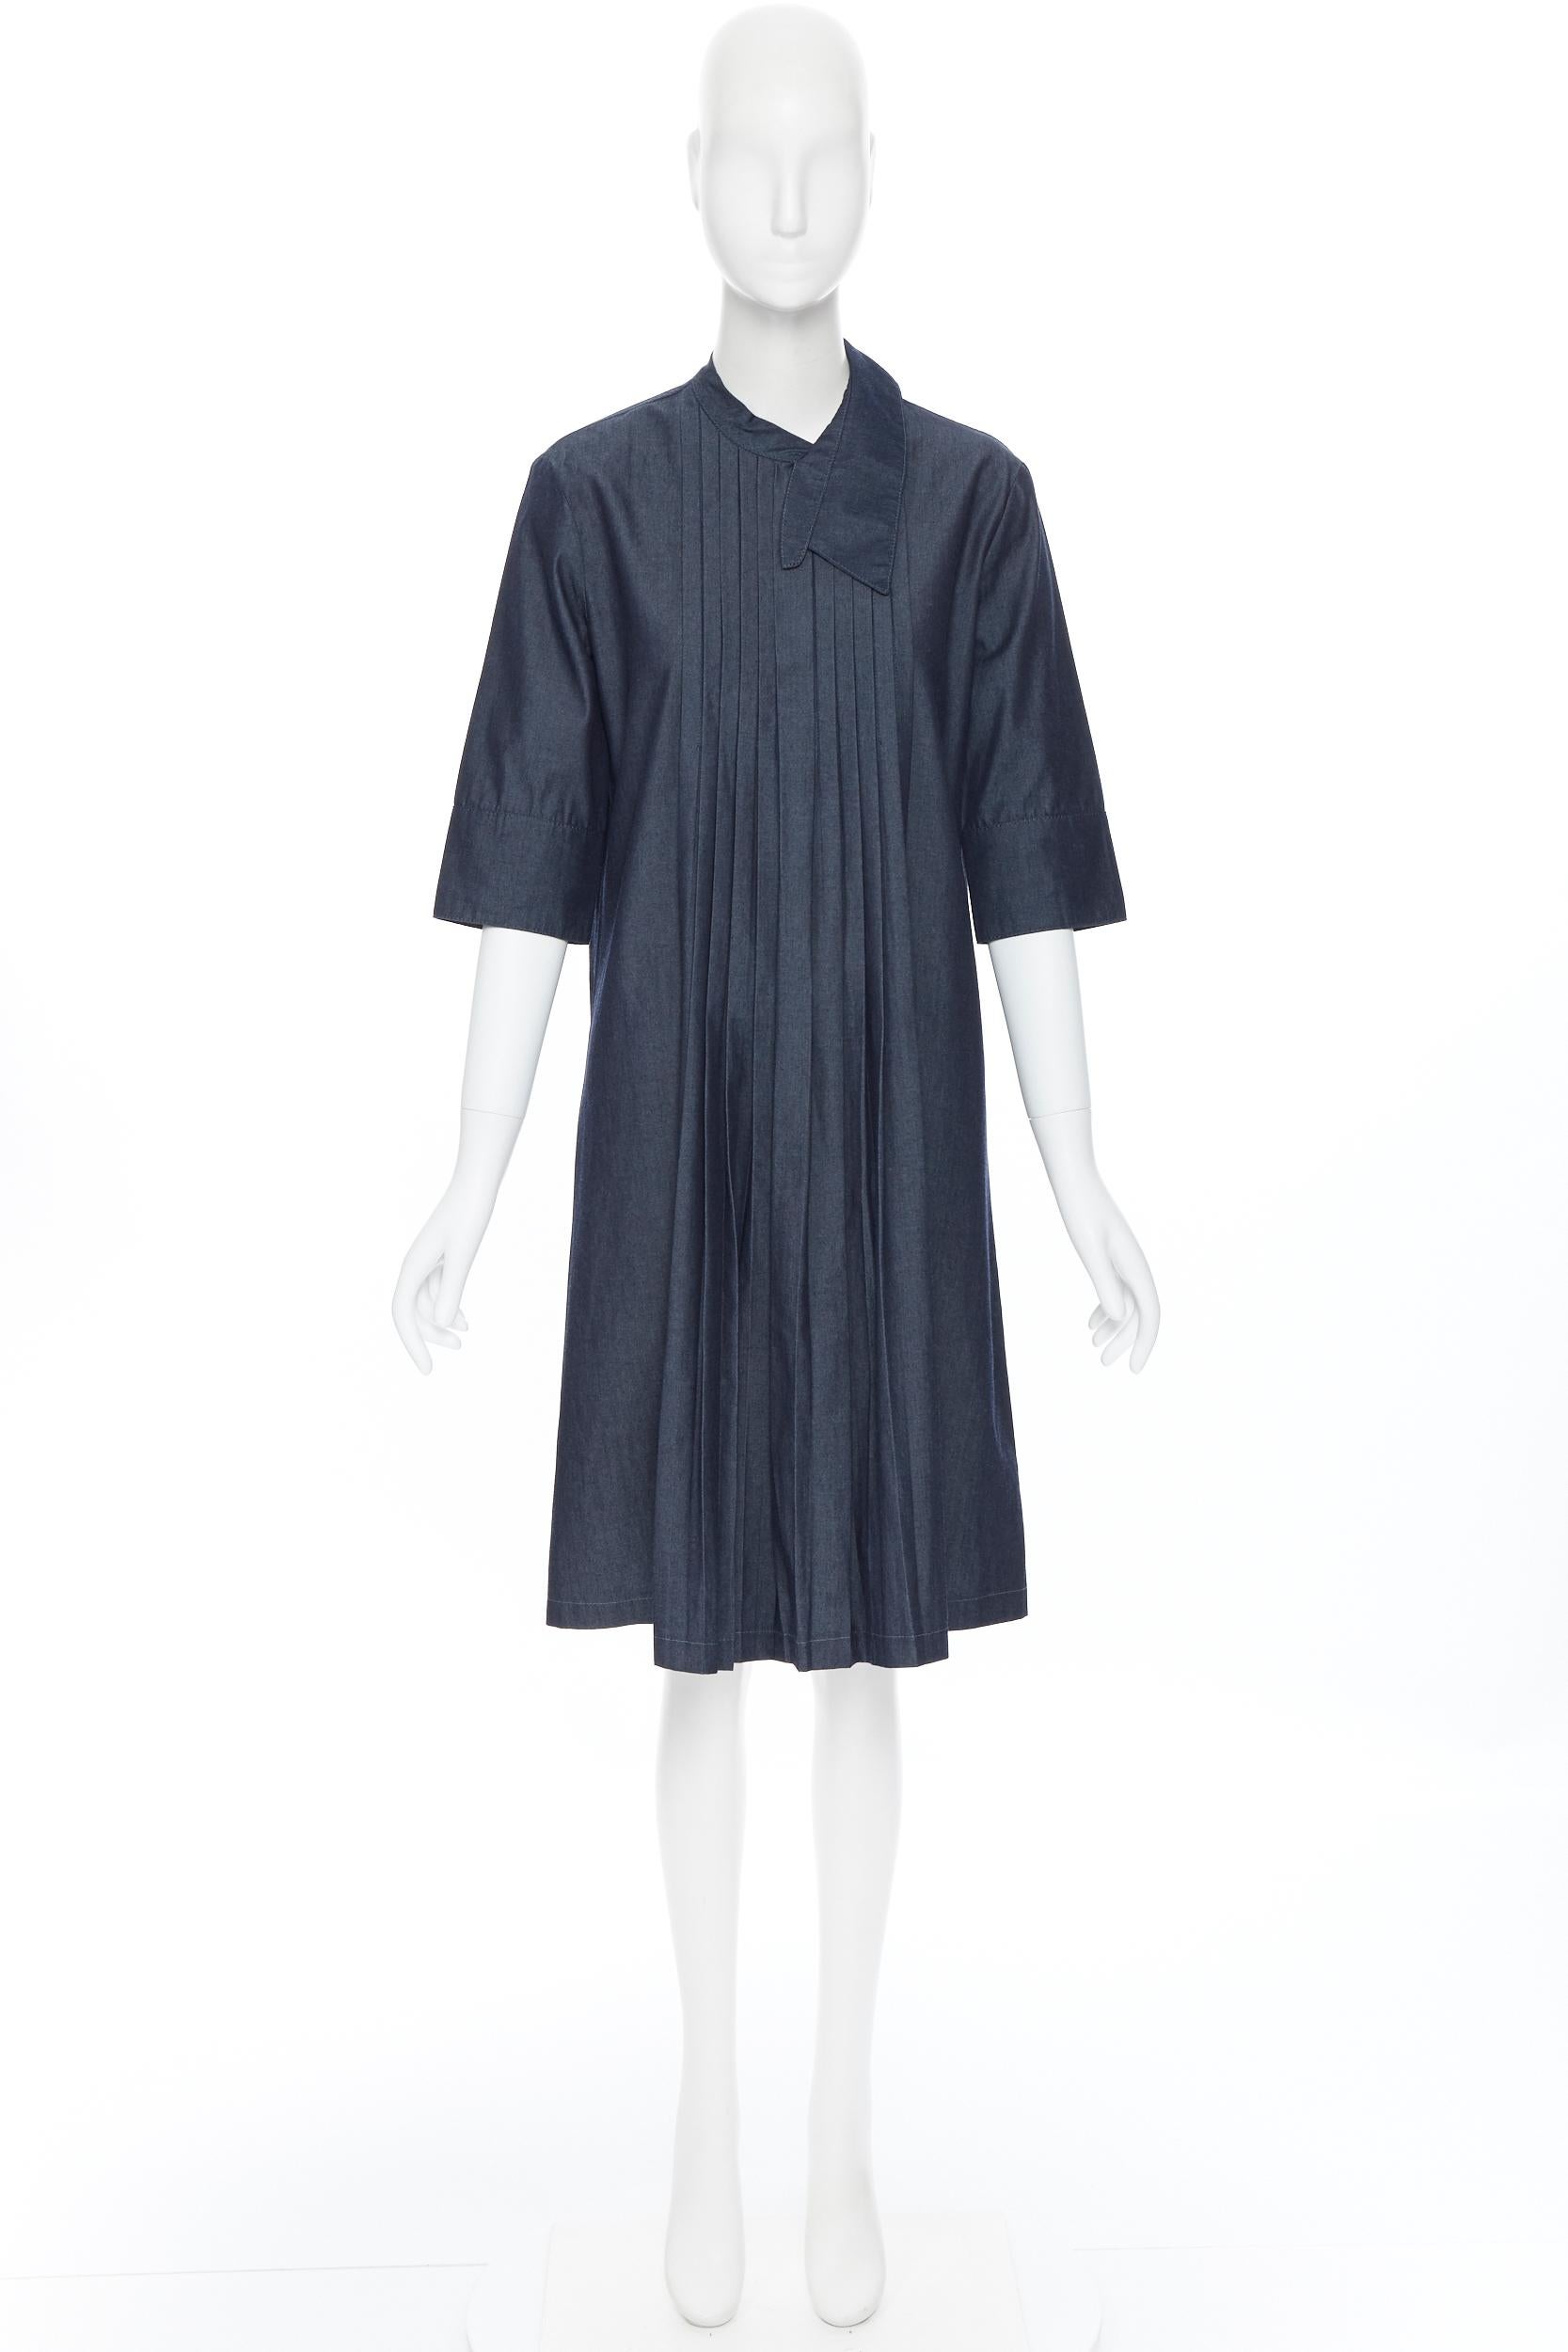 Black MARNI dark blue denim cotton deconstructed collar pleated casual dress IT42